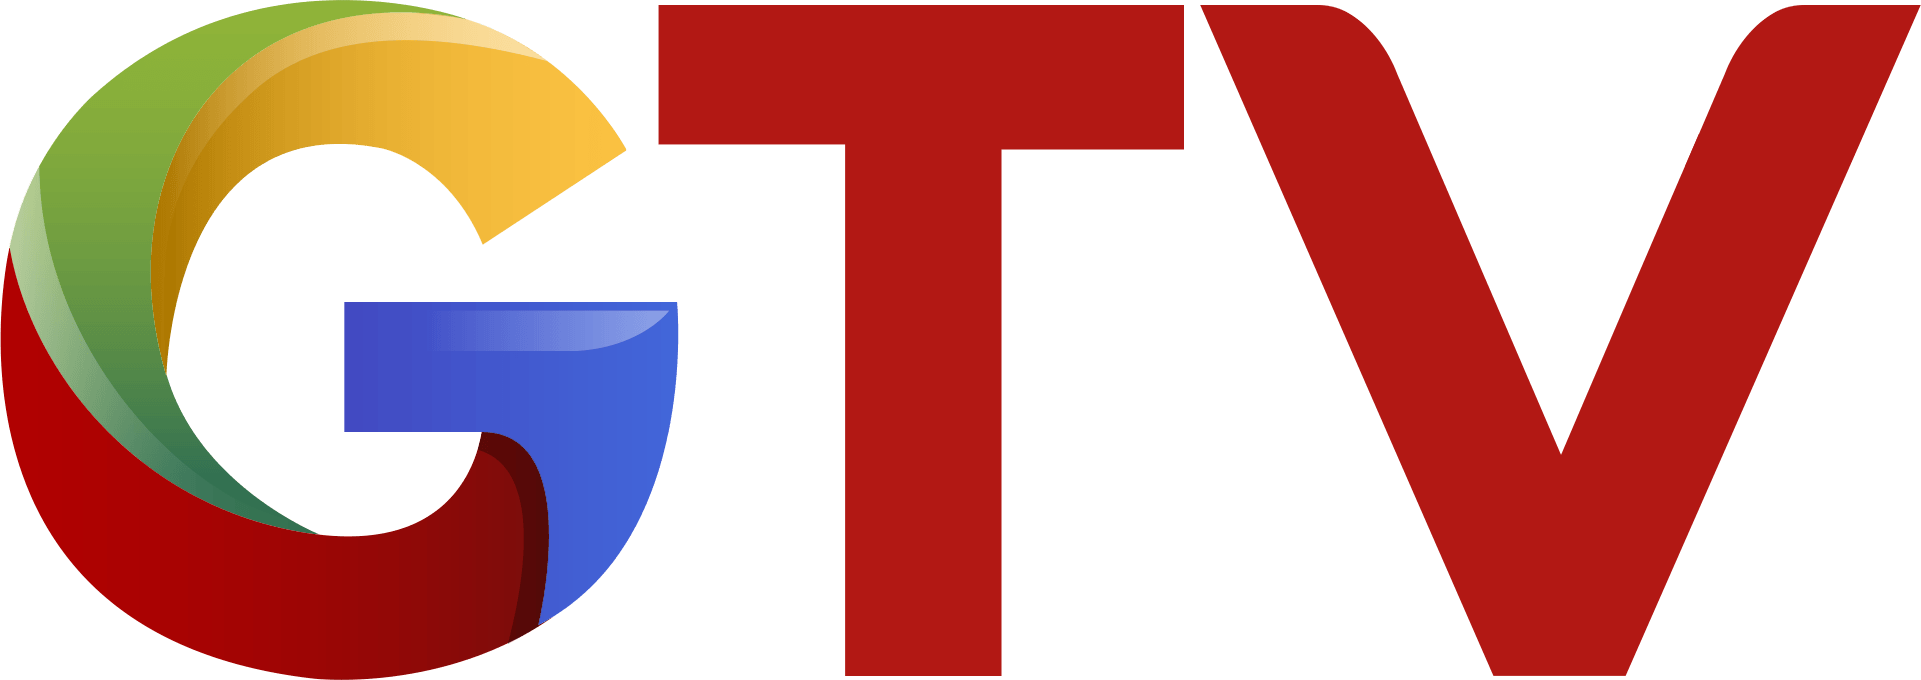 2017 Logo - File:GTV logo (2017).png - Wikimedia Commons